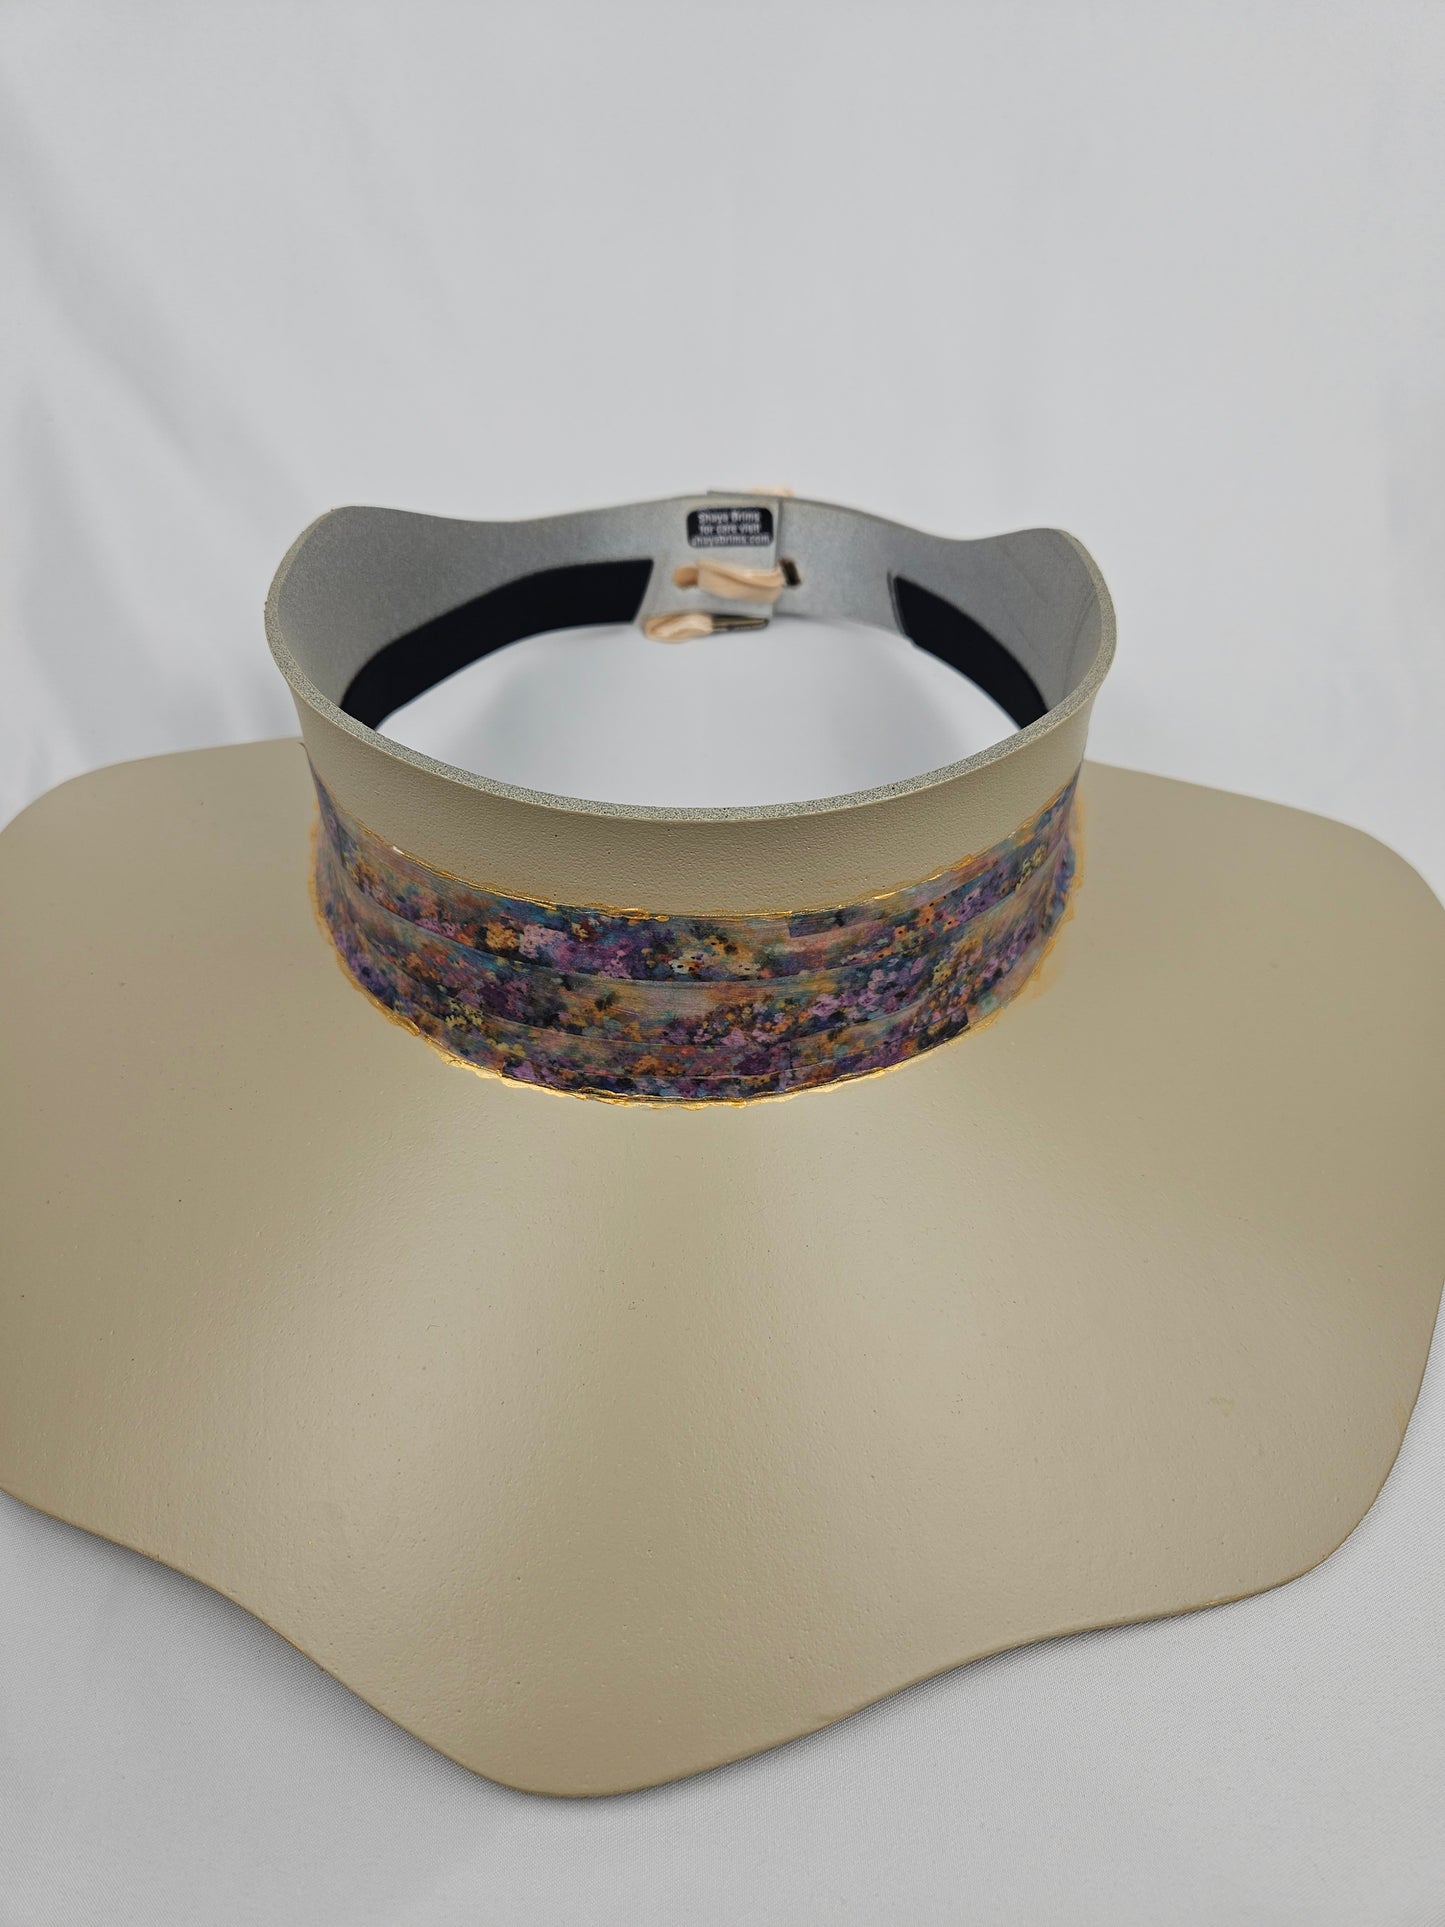 Beautiful Beige Lotus Foam Sun Visor Hat with Multi-Color Monet Style Band: 1950s, Walks, Brunch, Asian, Golf, Easter, Church, No Headache, Derby